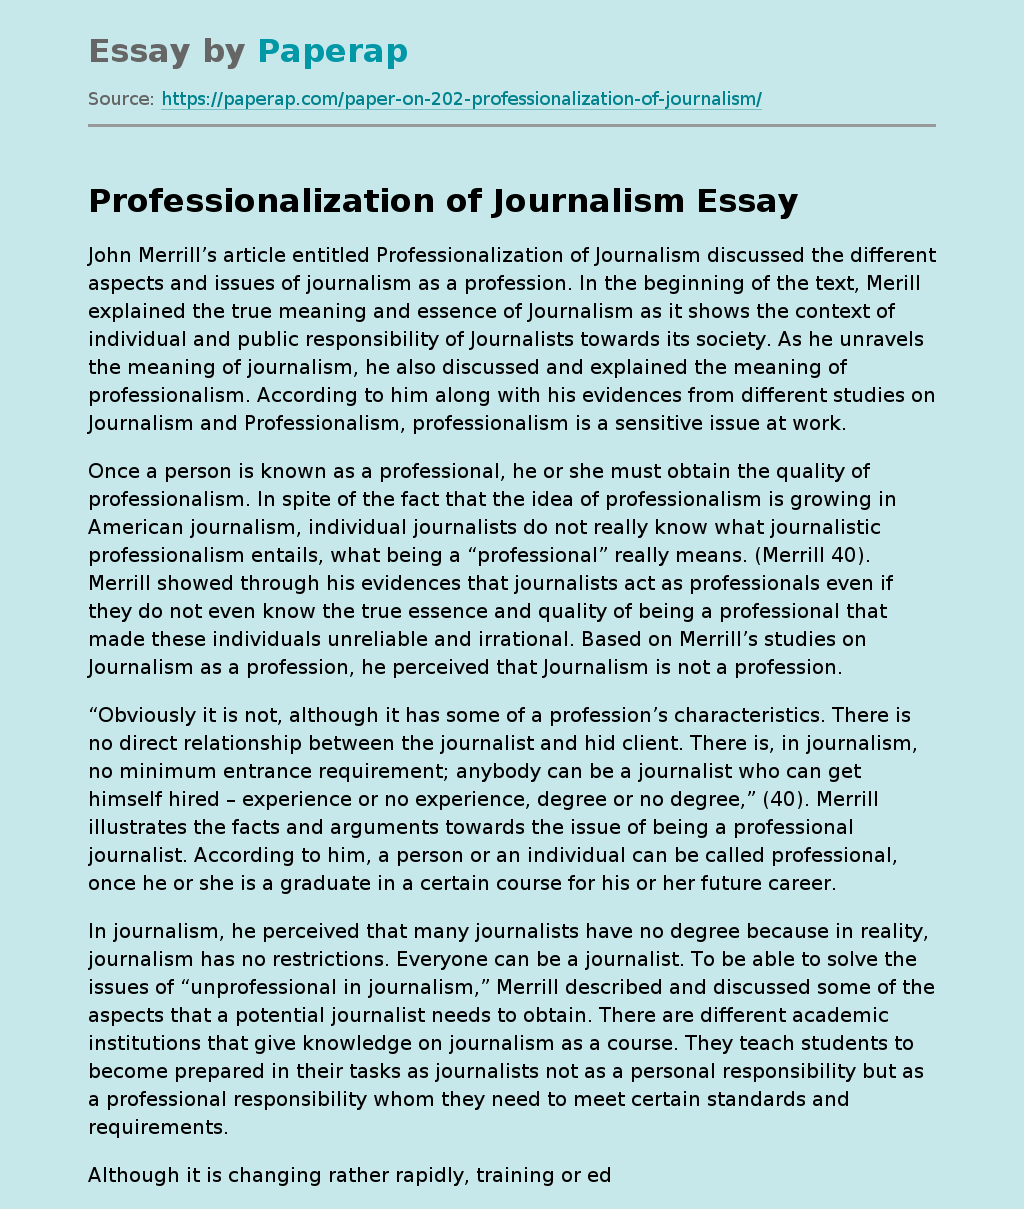 Professionalization of Journalism